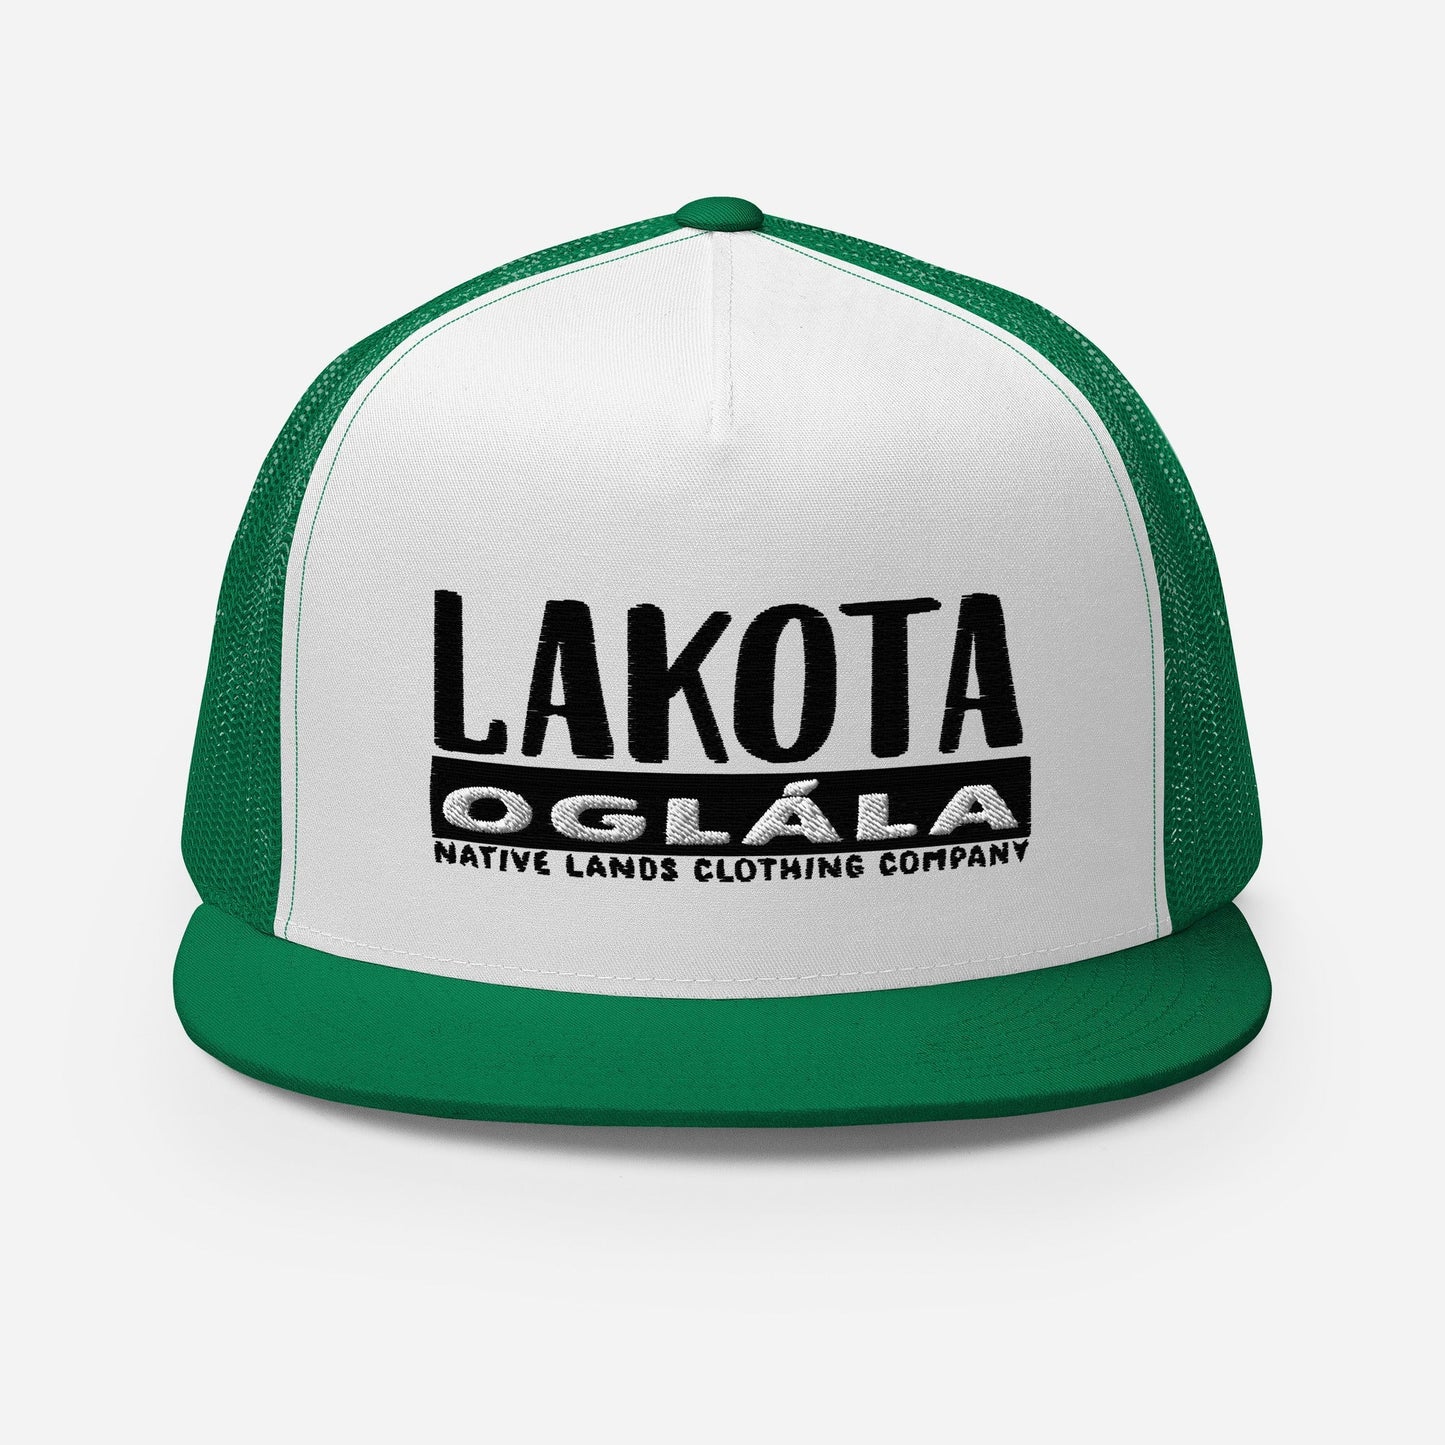 Lakota Oglala Trucker Hat Embroidered Native American Native Lands Clothing Company